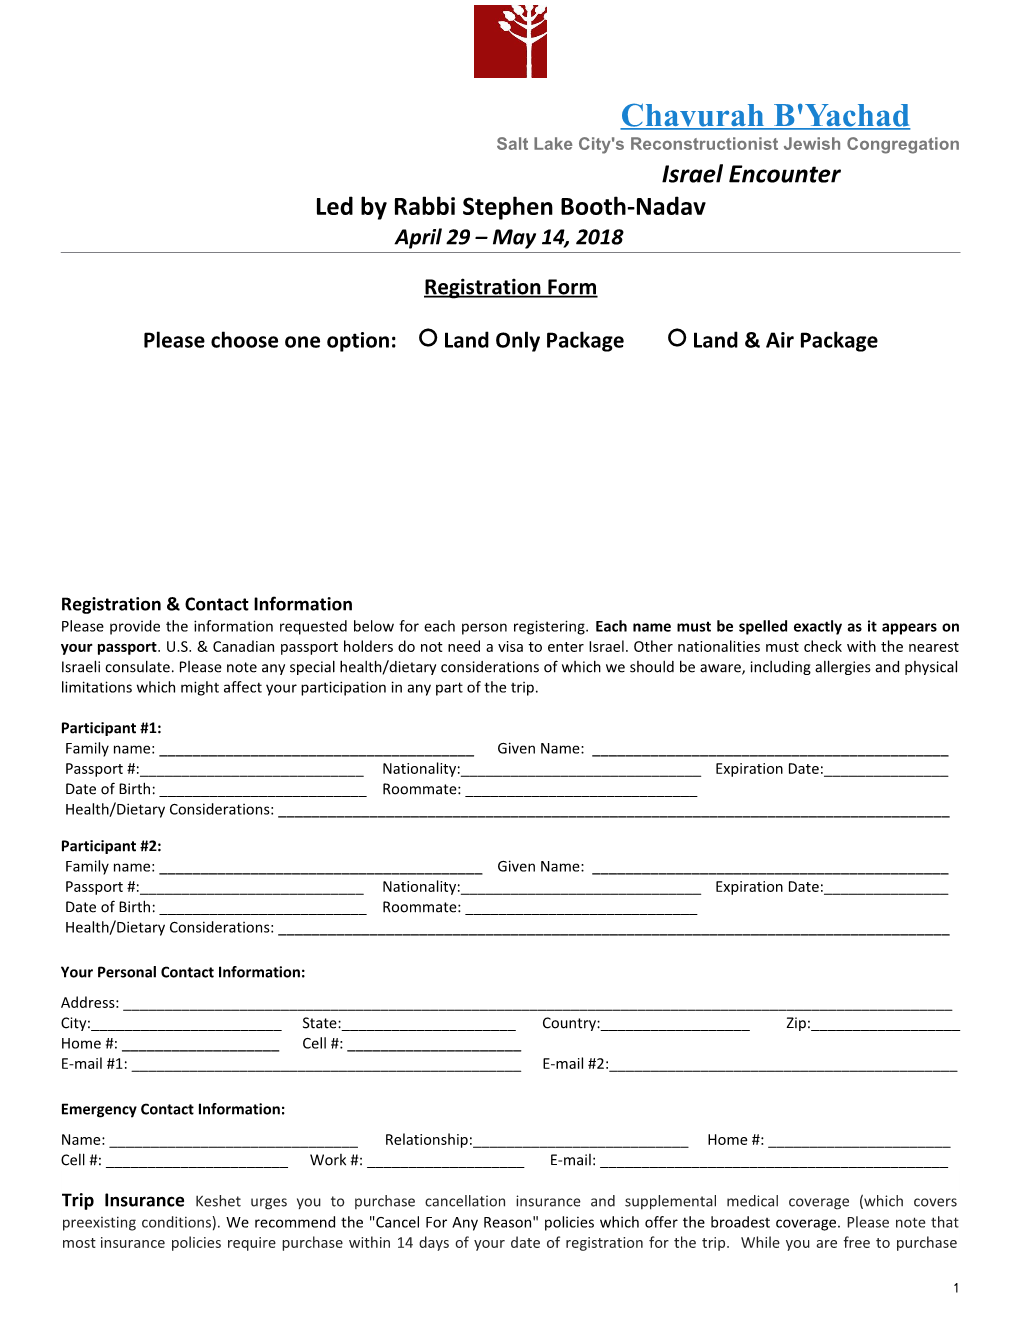 Registration Form (Page 2) Chavurah B Yachad